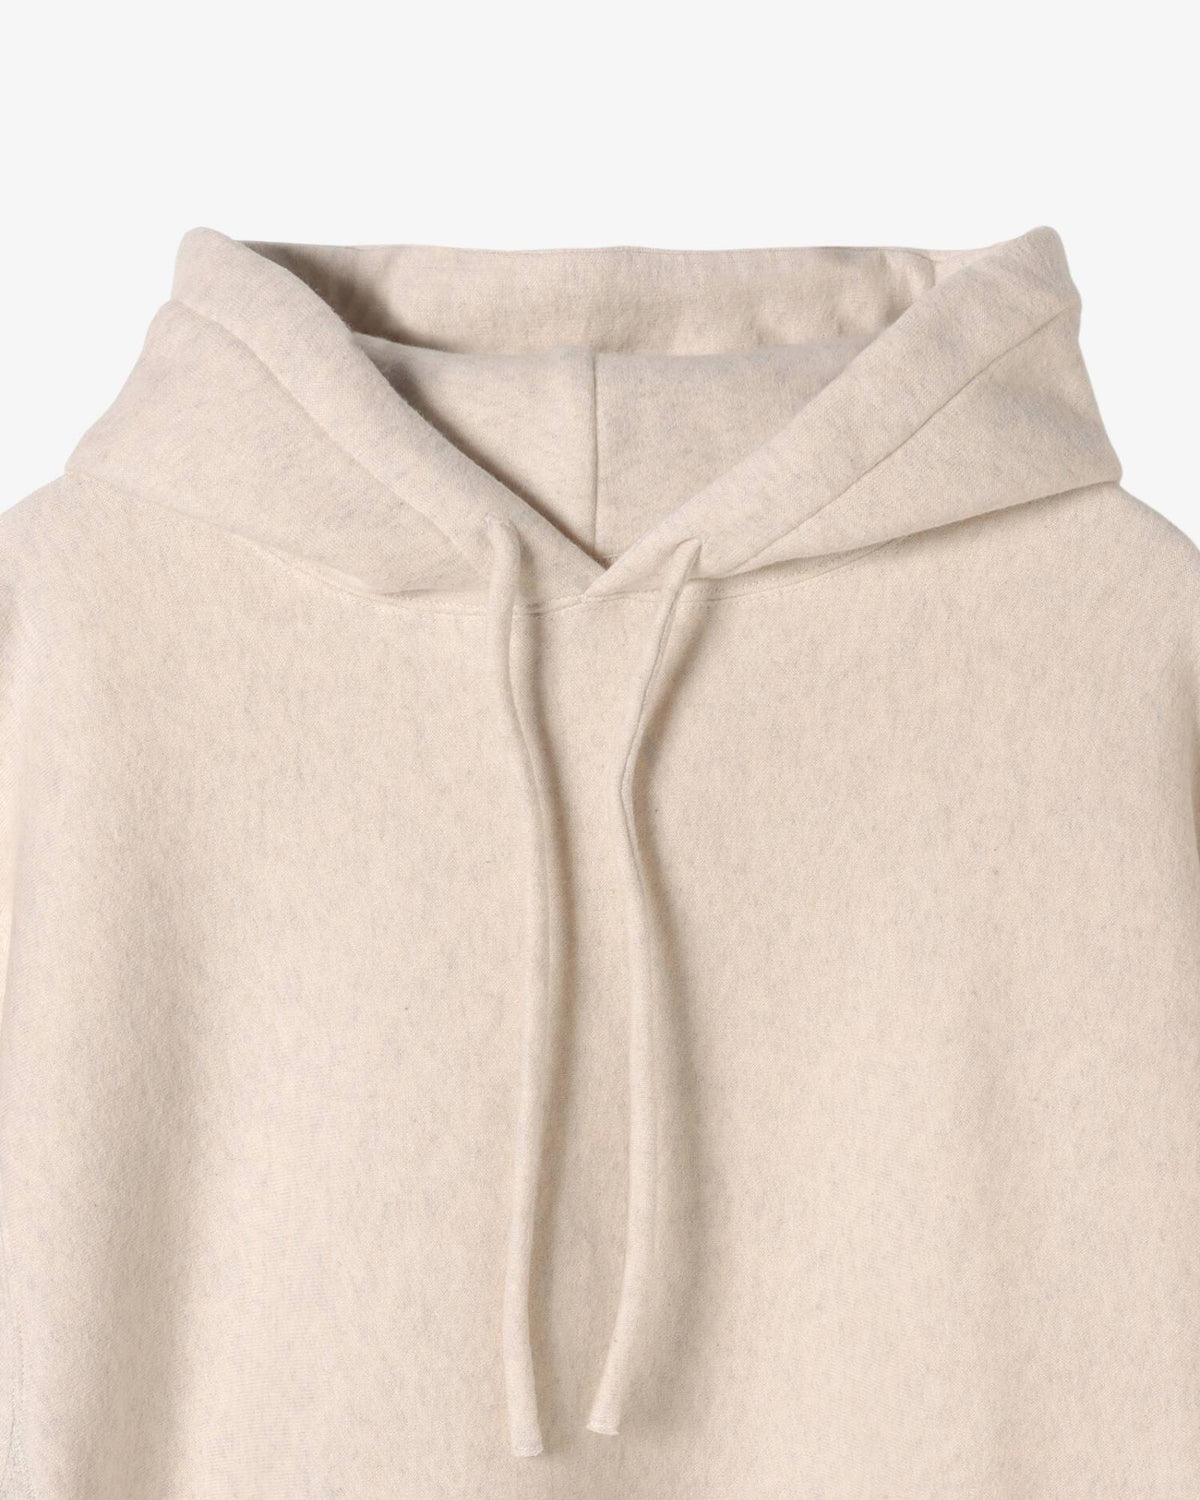 Cotton Tencel Brushed Fleece Hoodies by V::Room